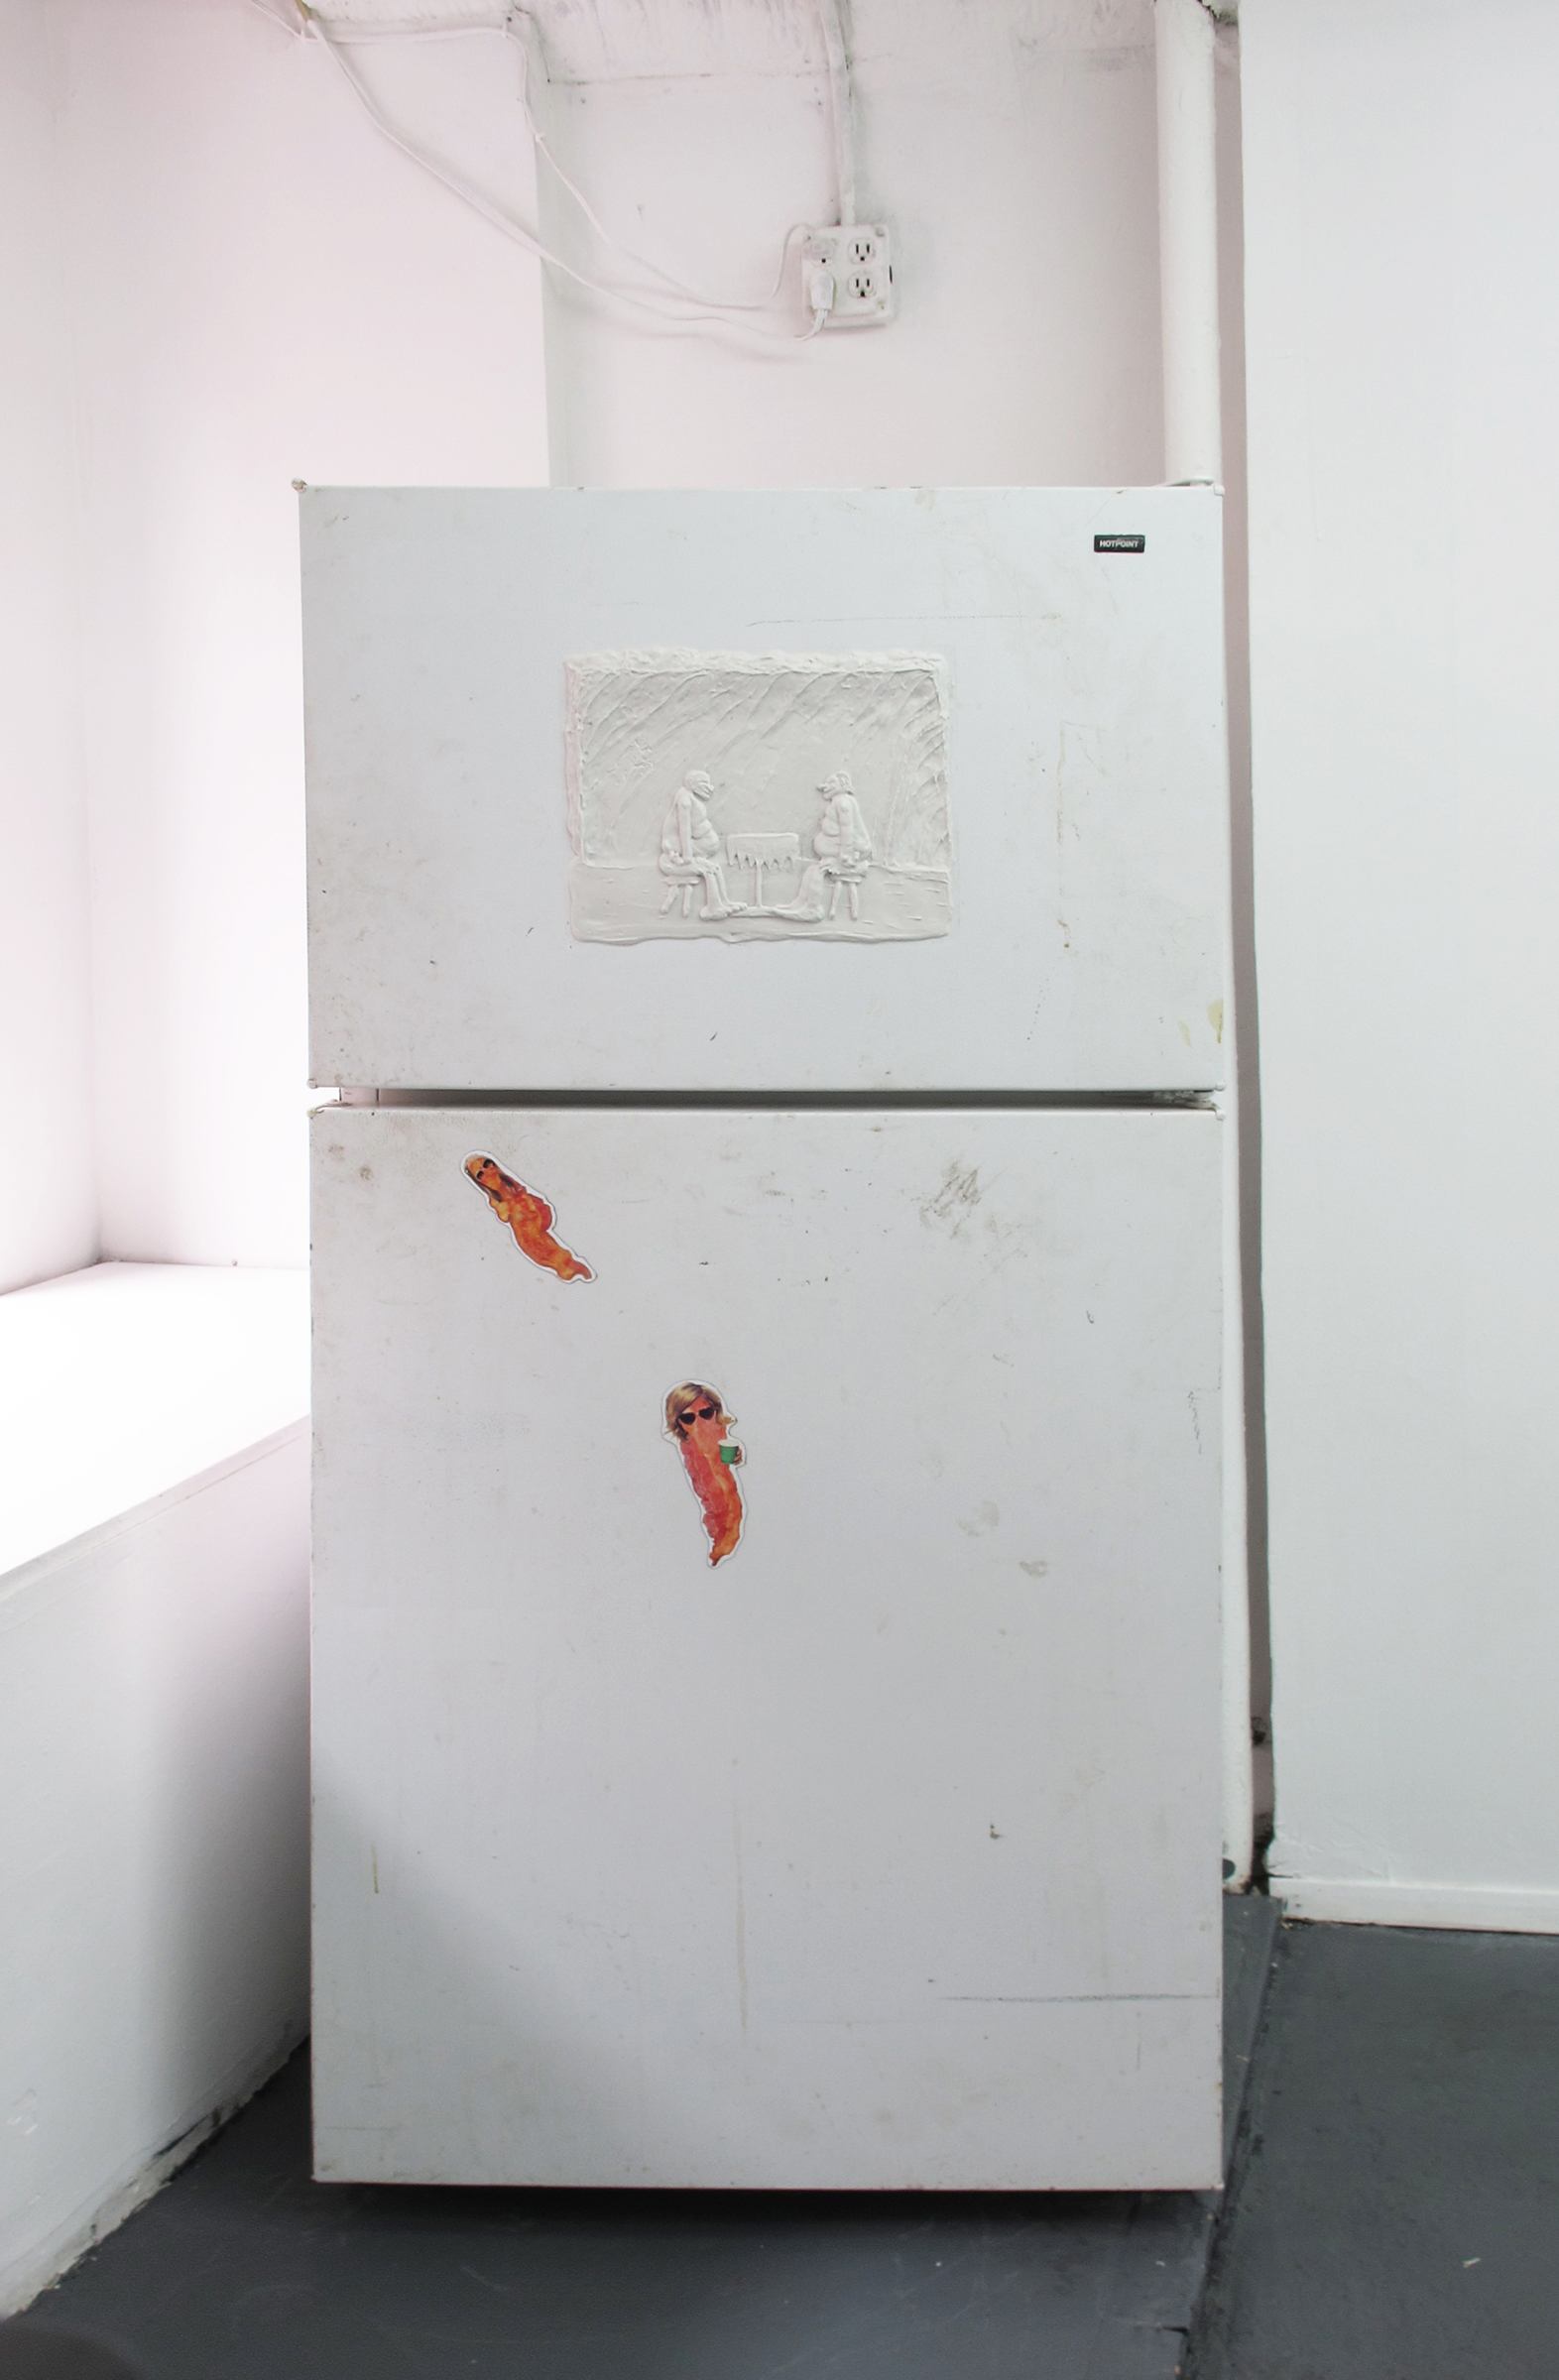  Michael Assiff,  Fridge , 2015, plastic on refrigerator, 60 x 28 x 28 in 